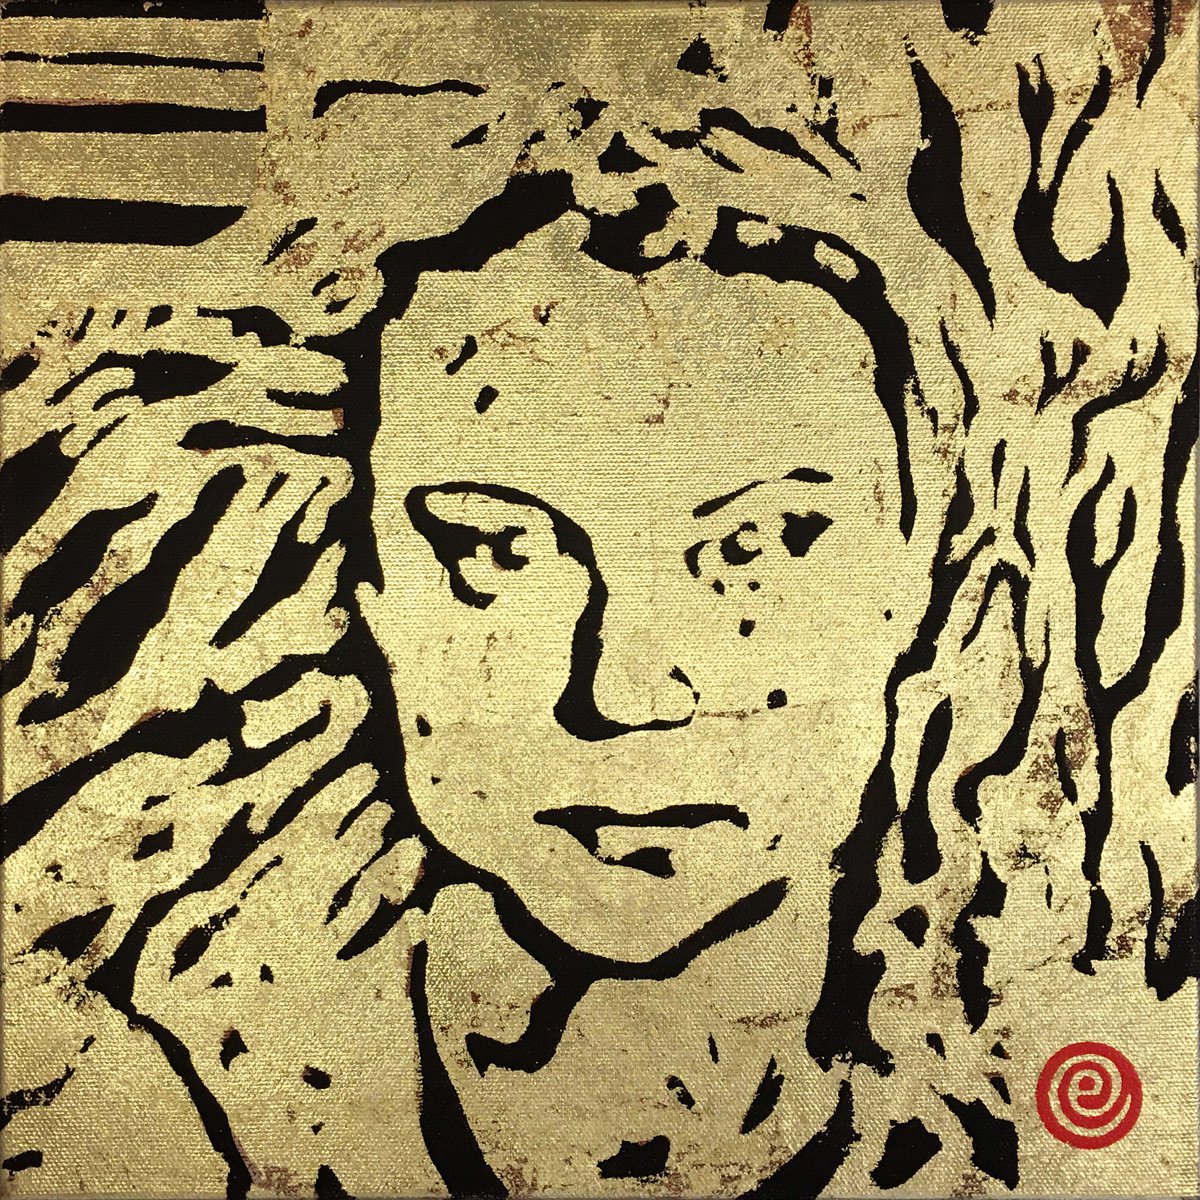 Greta Thunberg by Antti Eklund